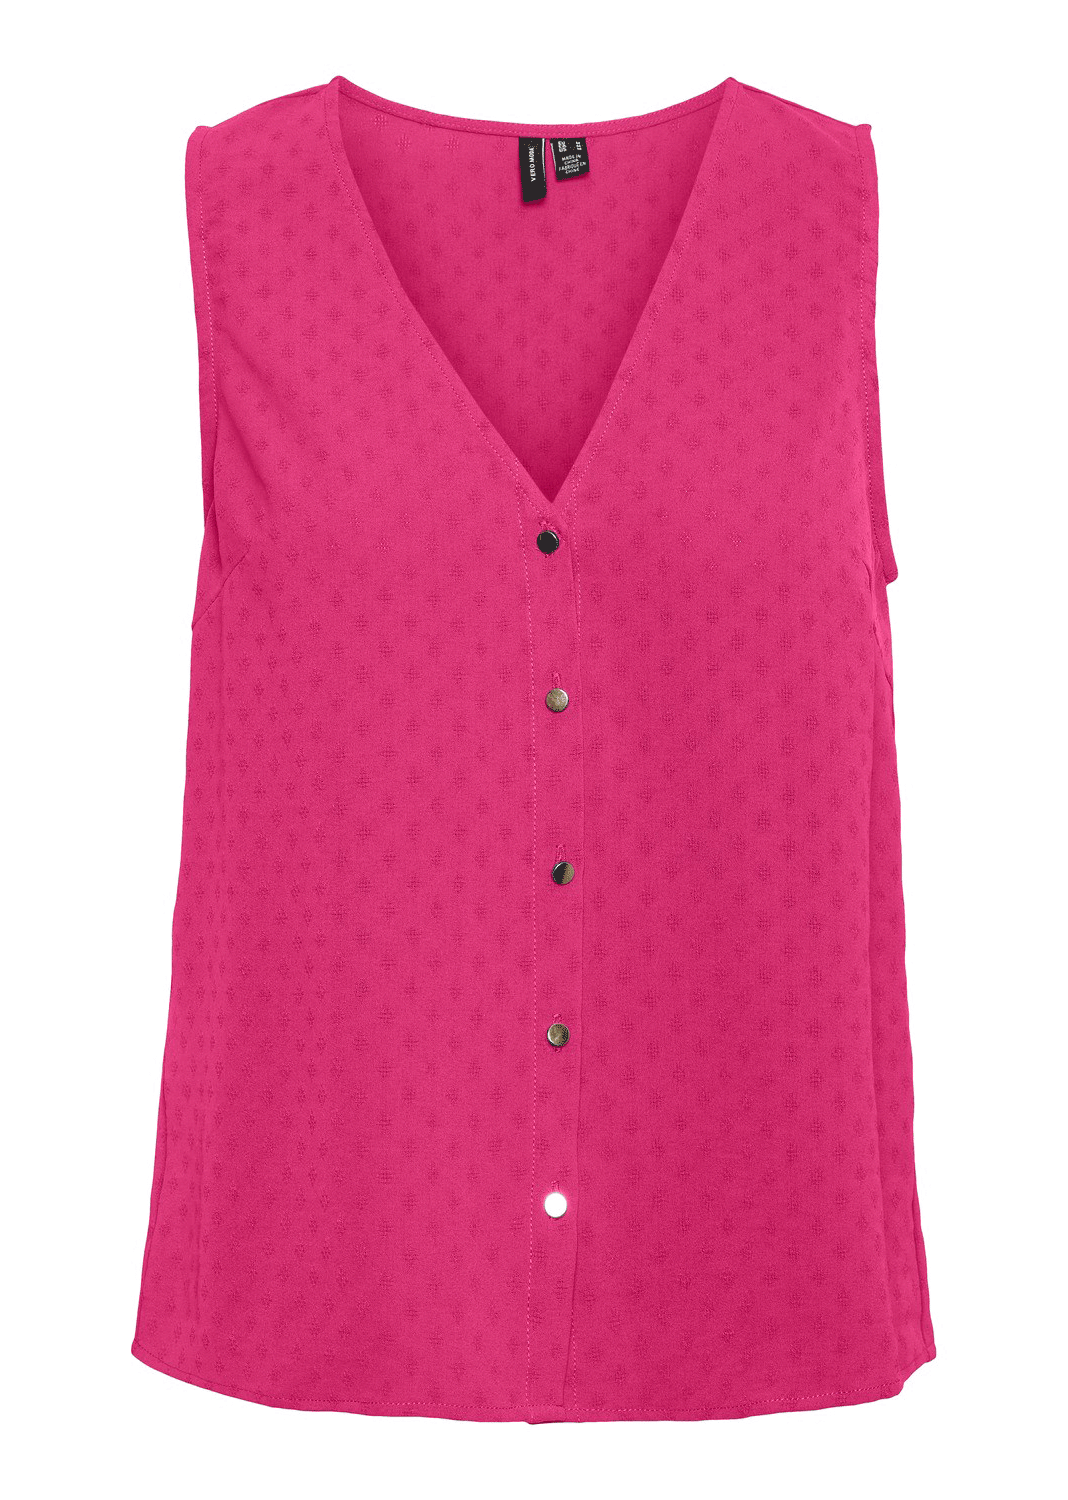 Pink sleeveless top